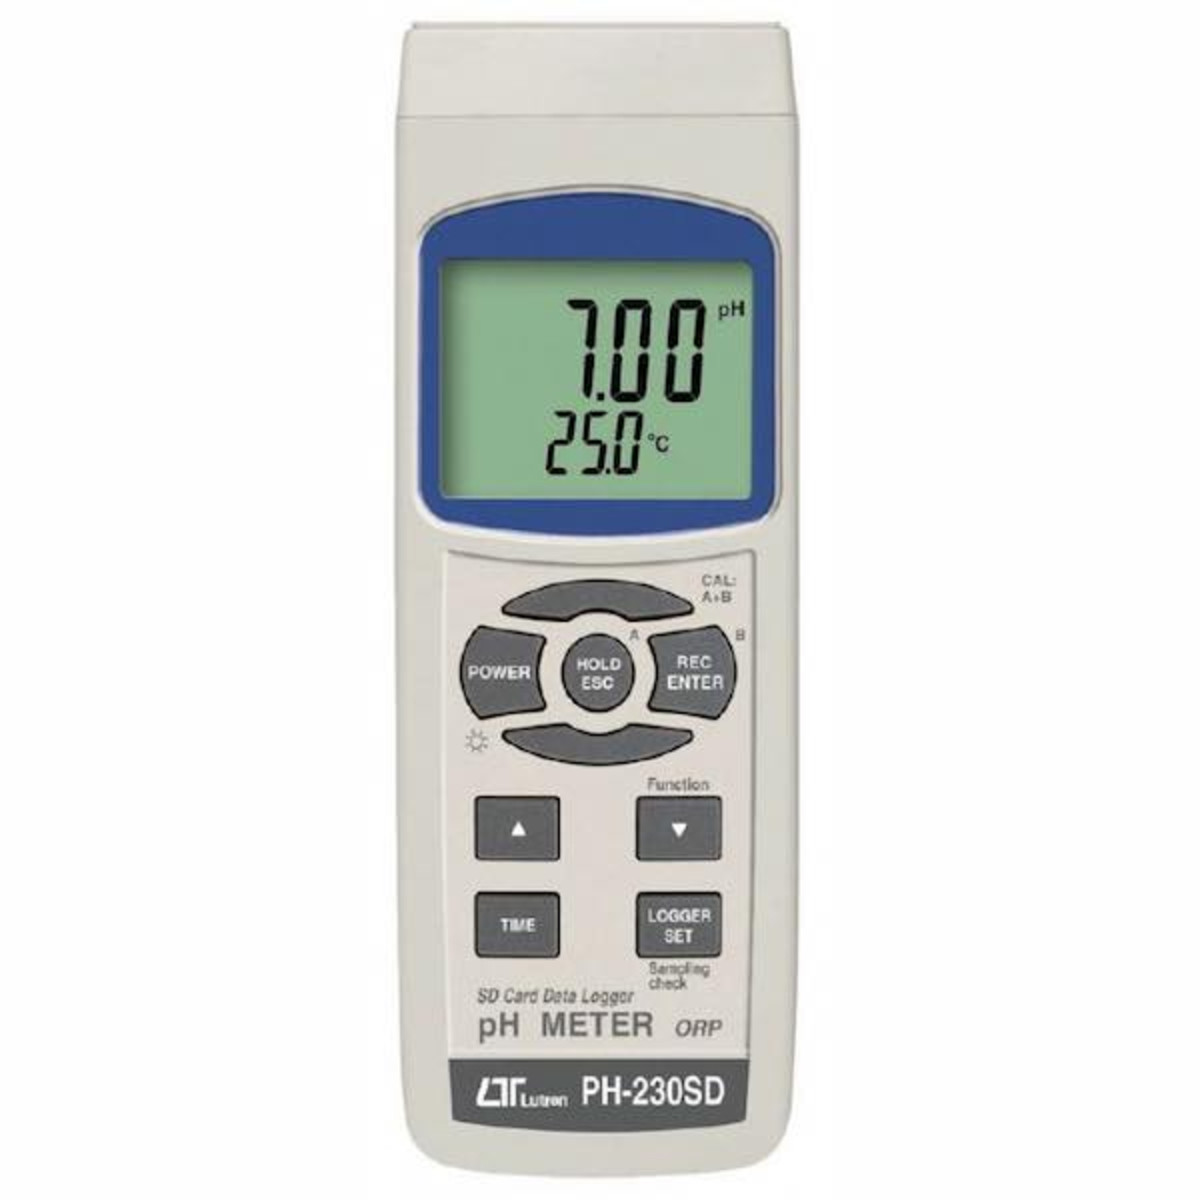 LUTRON PH-230SD pH METER with SD card datalogger